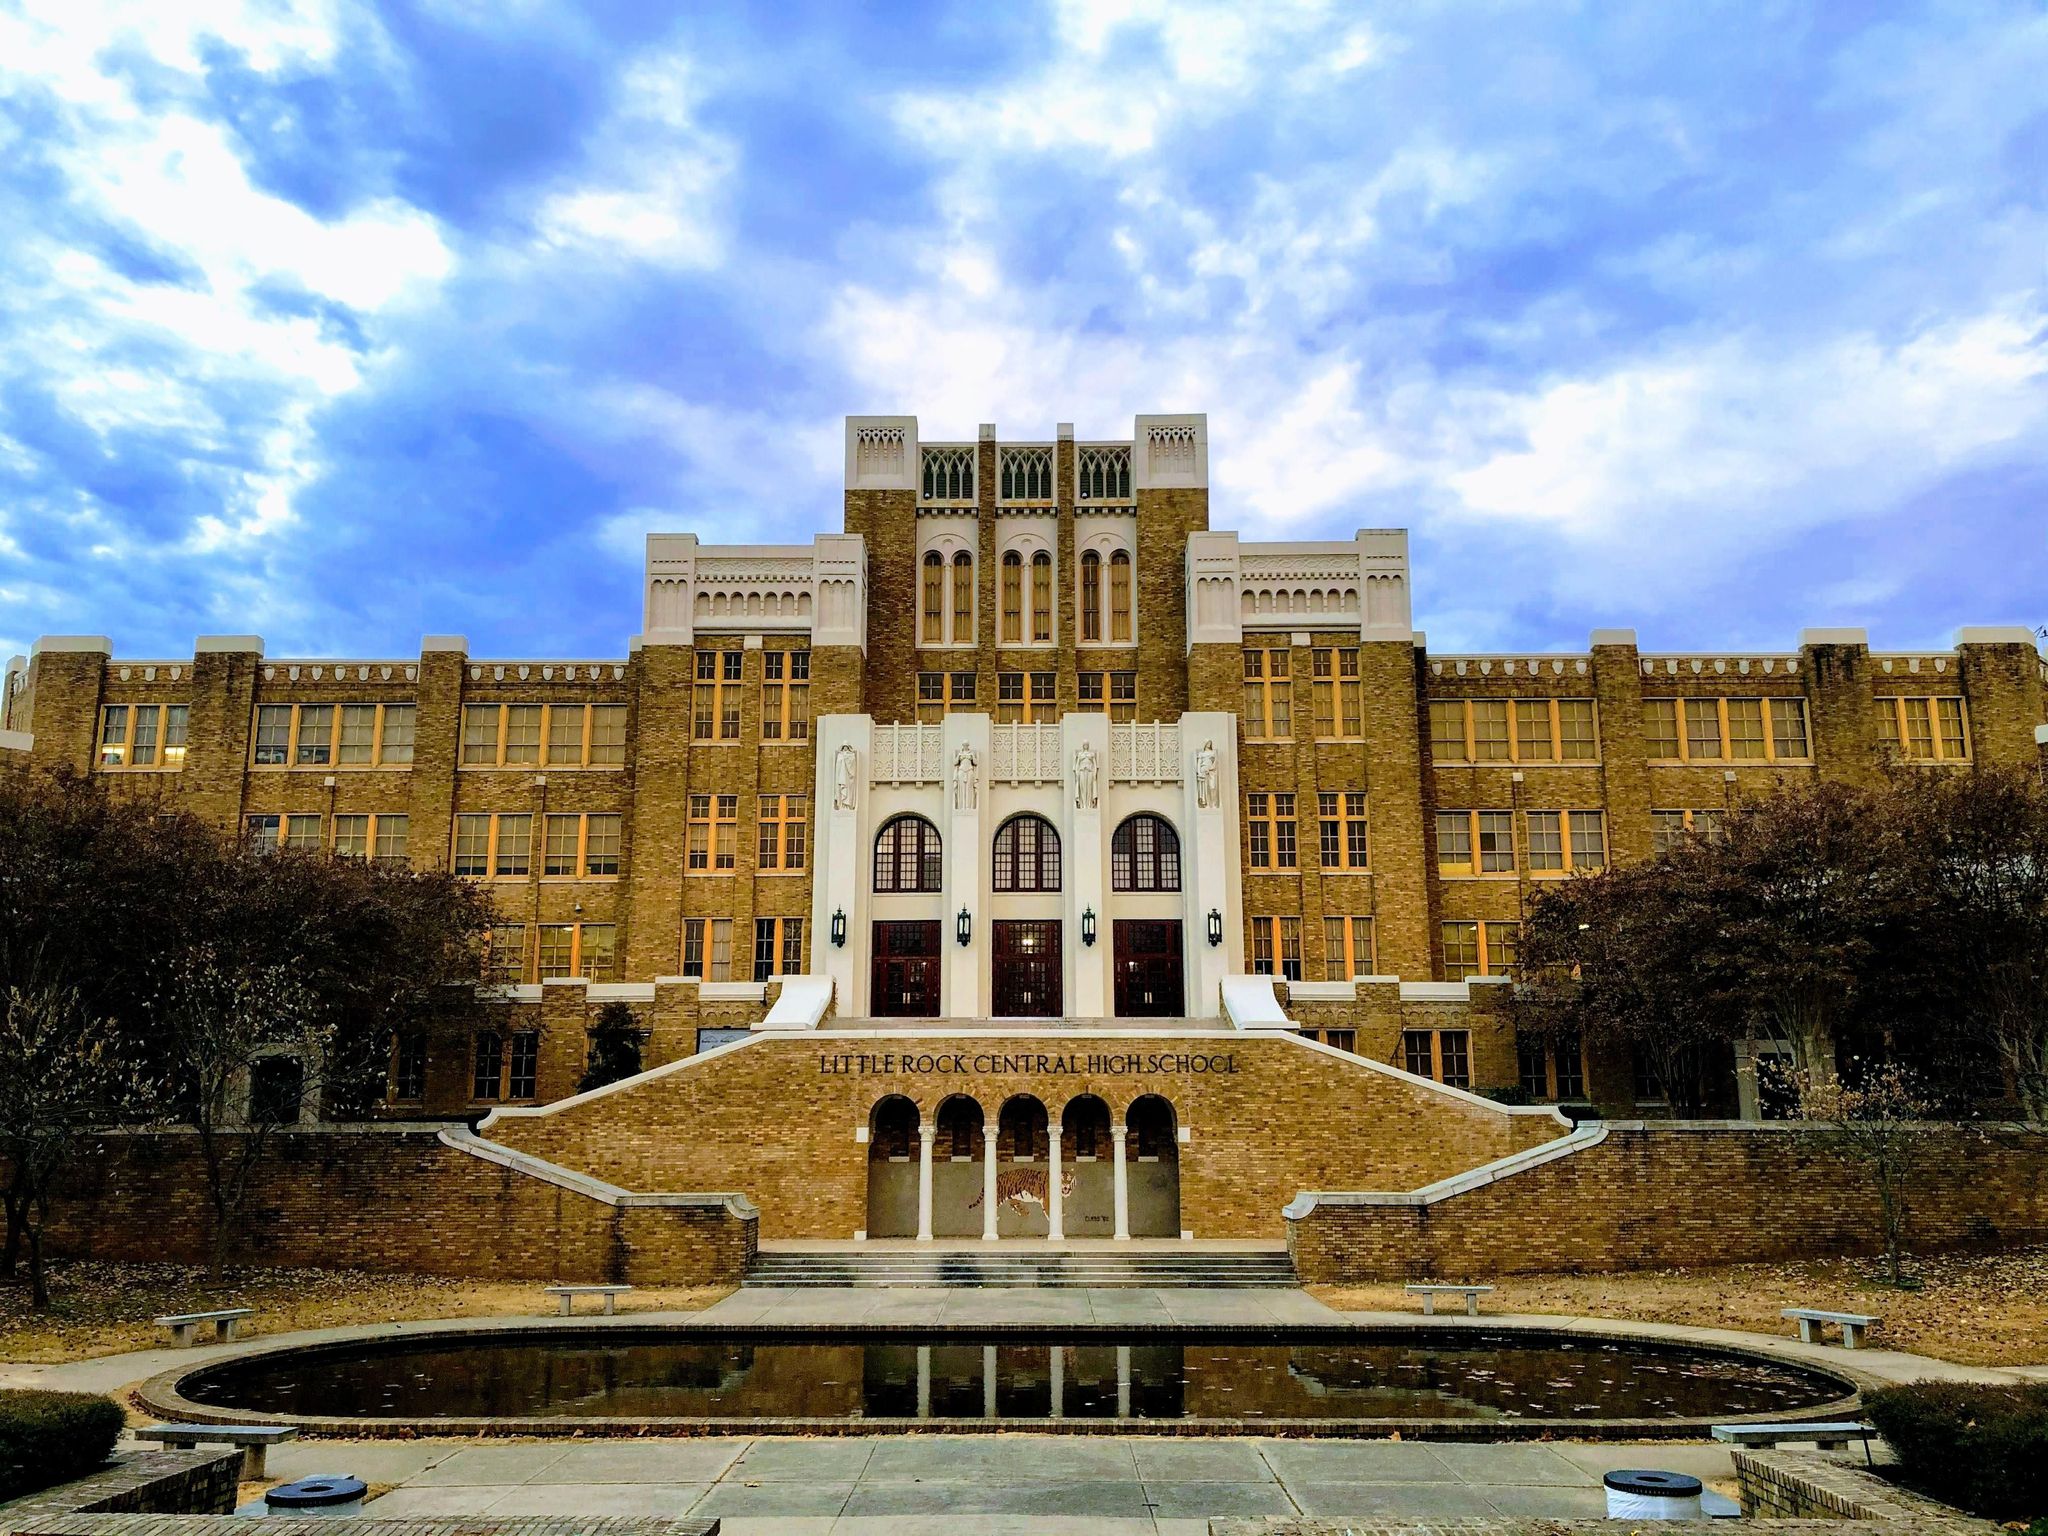 Little Rock Central High School has been a public school since opening in 1927.